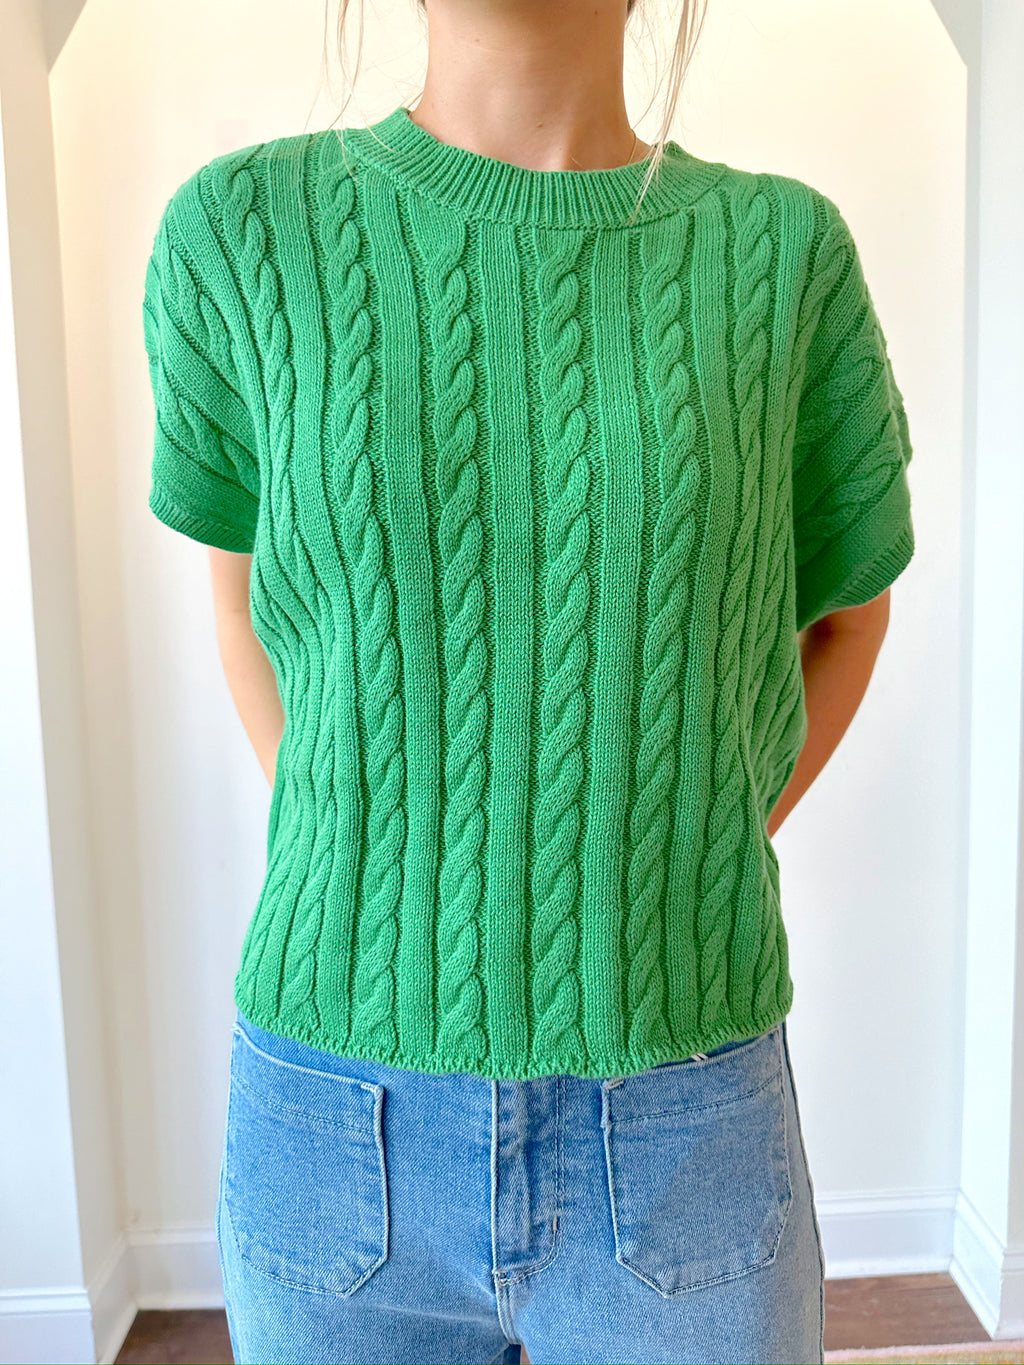 Celeste Green Sweater